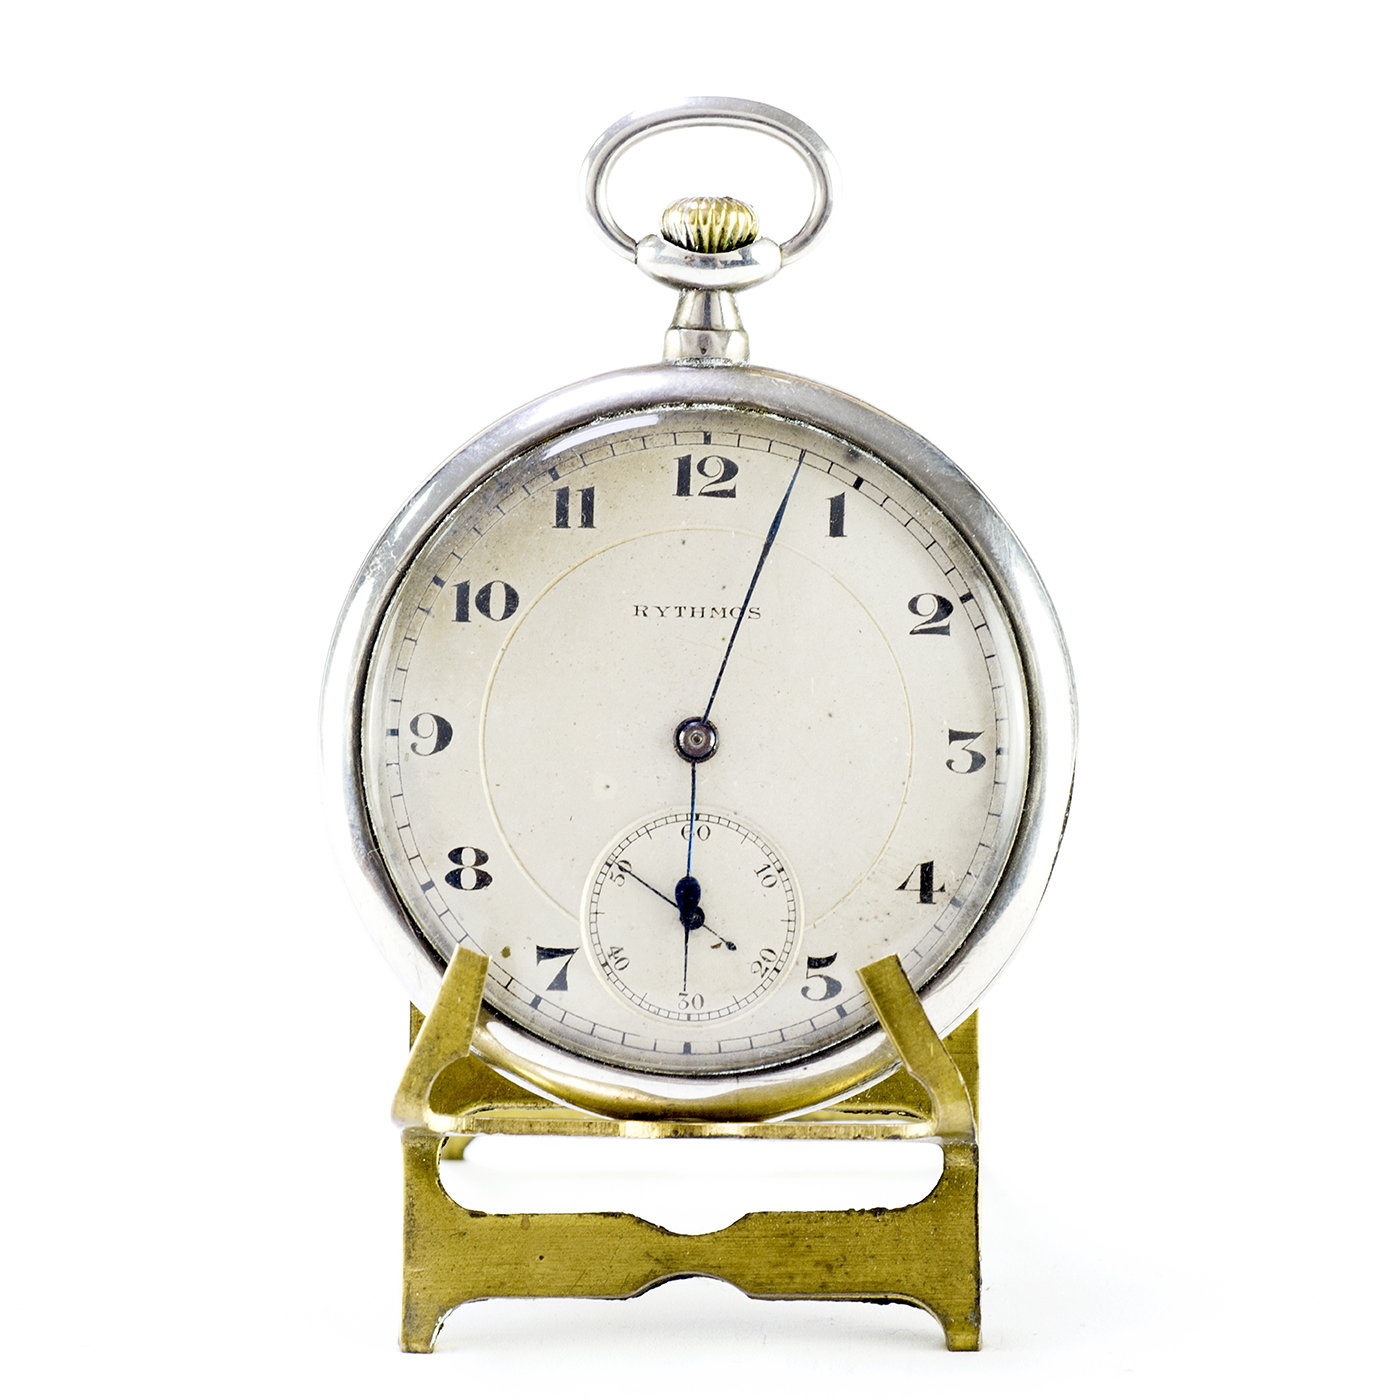 RYTHMOS . Reloj de Lepine y remontoir. Suiza, ca. 1910. Fígaro